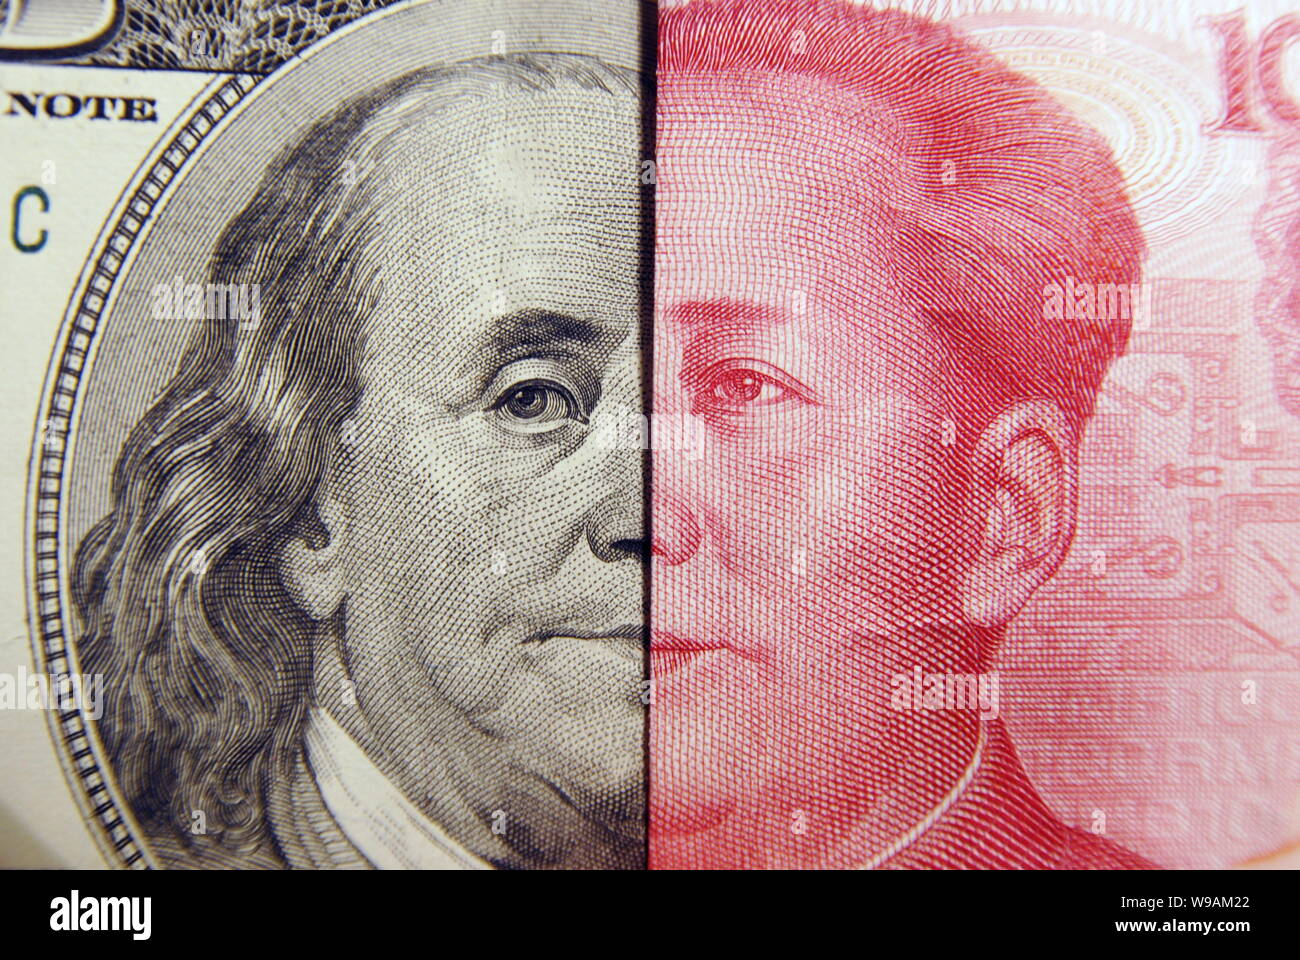 Keyword: China, Chinese, RMB, renminbi, yuan, USD, US dollar, money, currency, bank, note, banknote, economy, battle, paper, bill, creative, photo, im Stock Photo